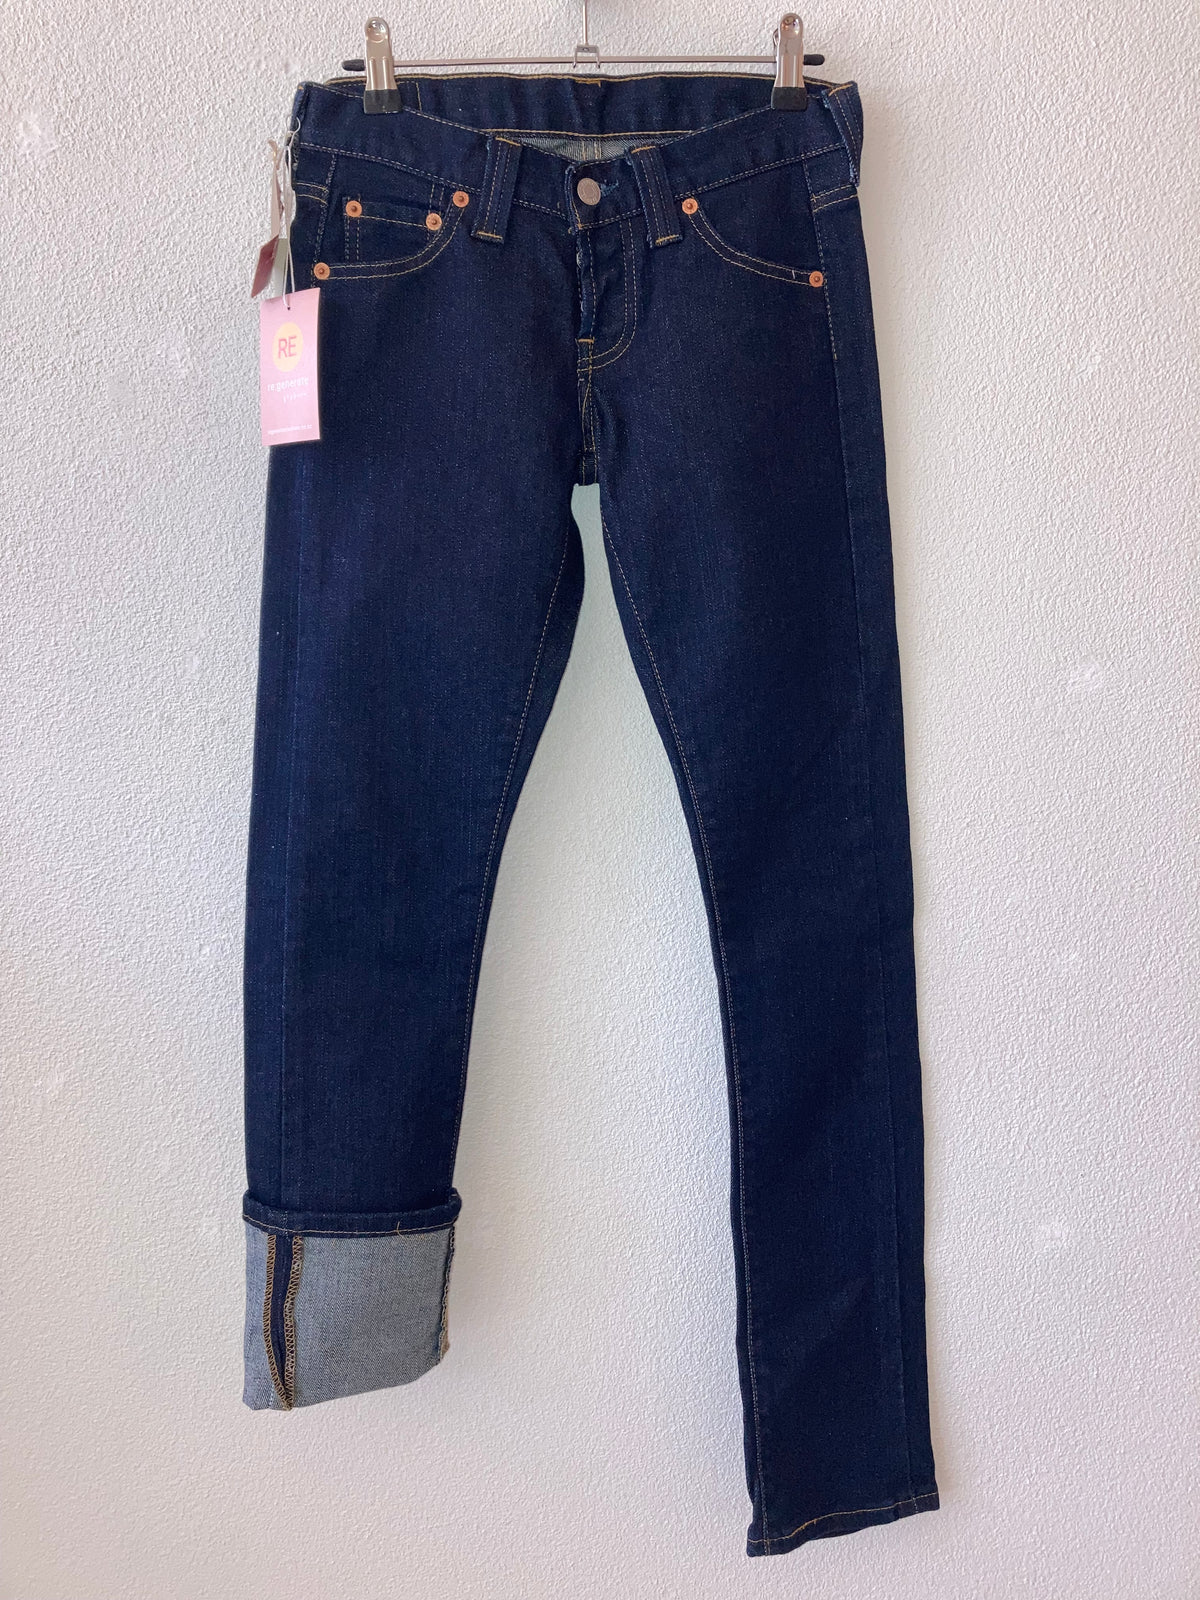 Levis Skinny Jeans W25 L32 6